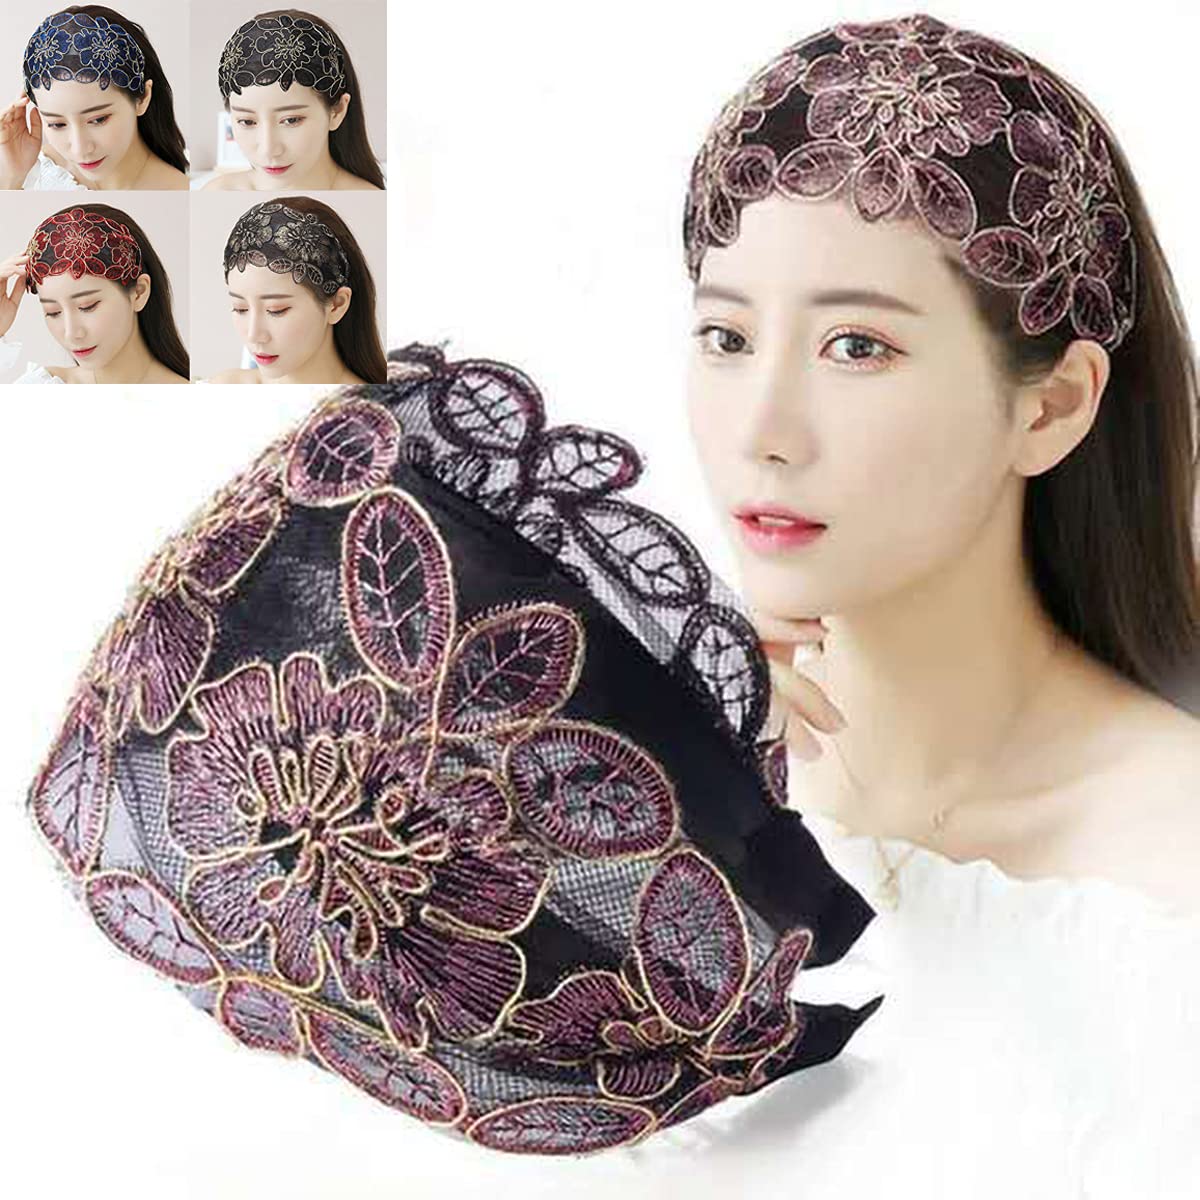 Lace Flower Headband